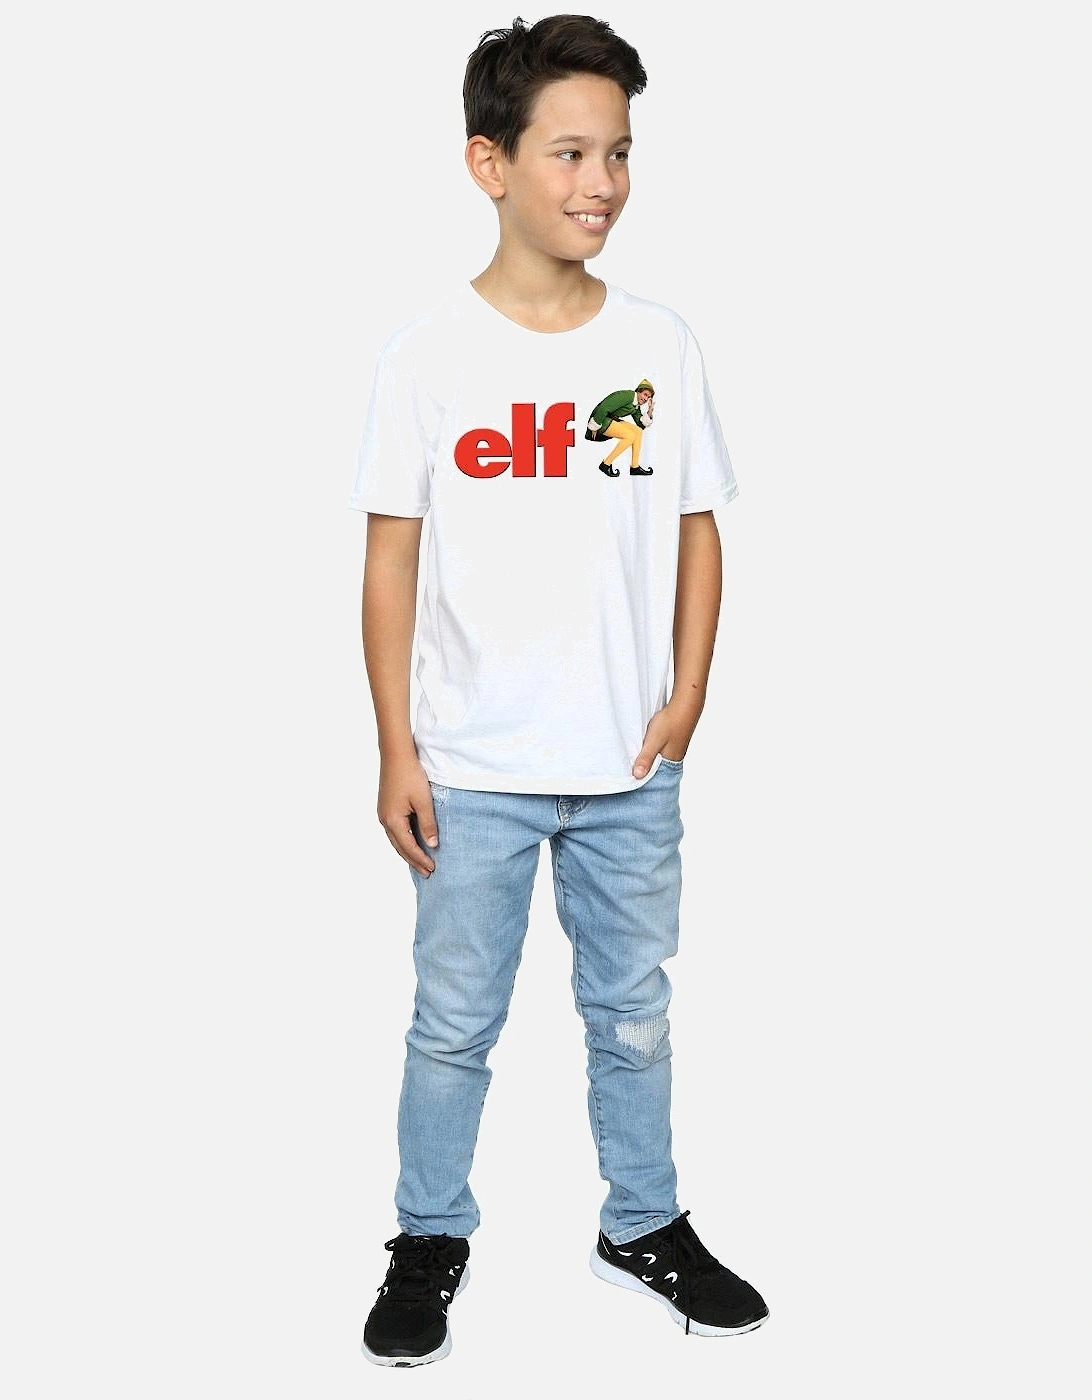 Boys Crouching Logo T-Shirt